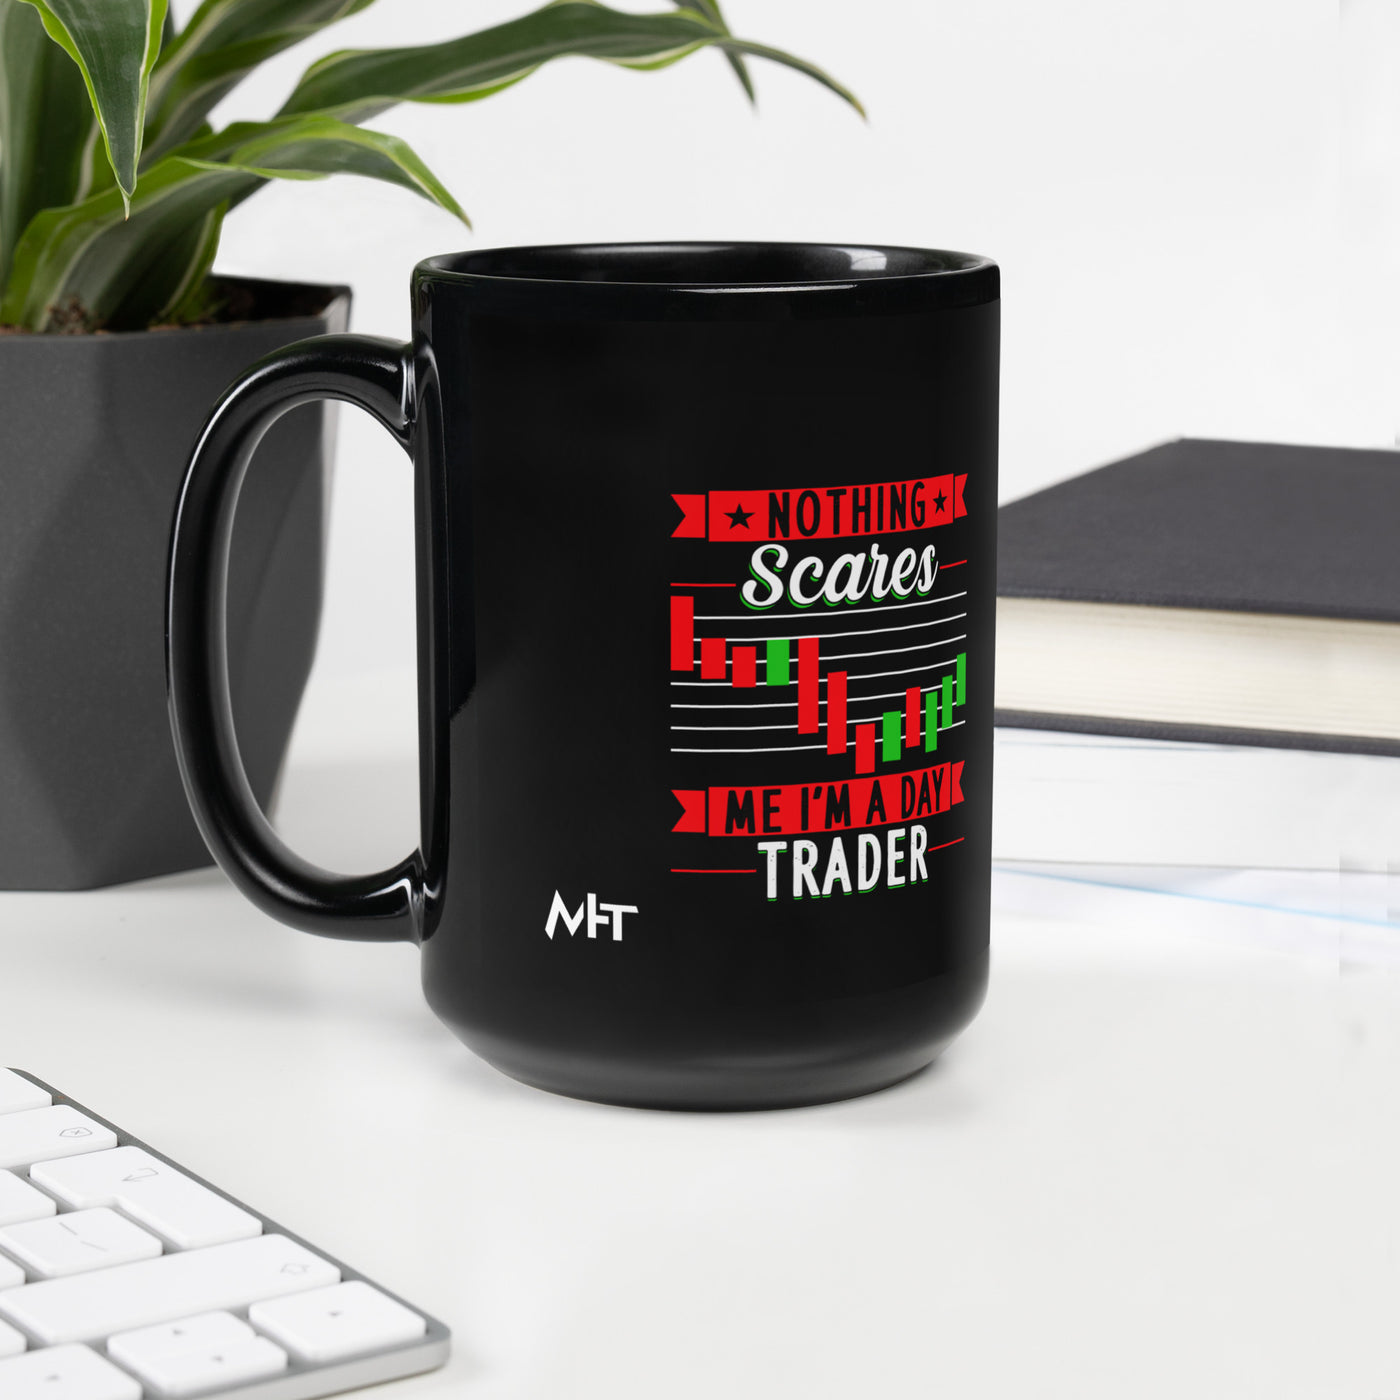 Nothing Scares me; I Am a Day Trader - Black Glossy Mug